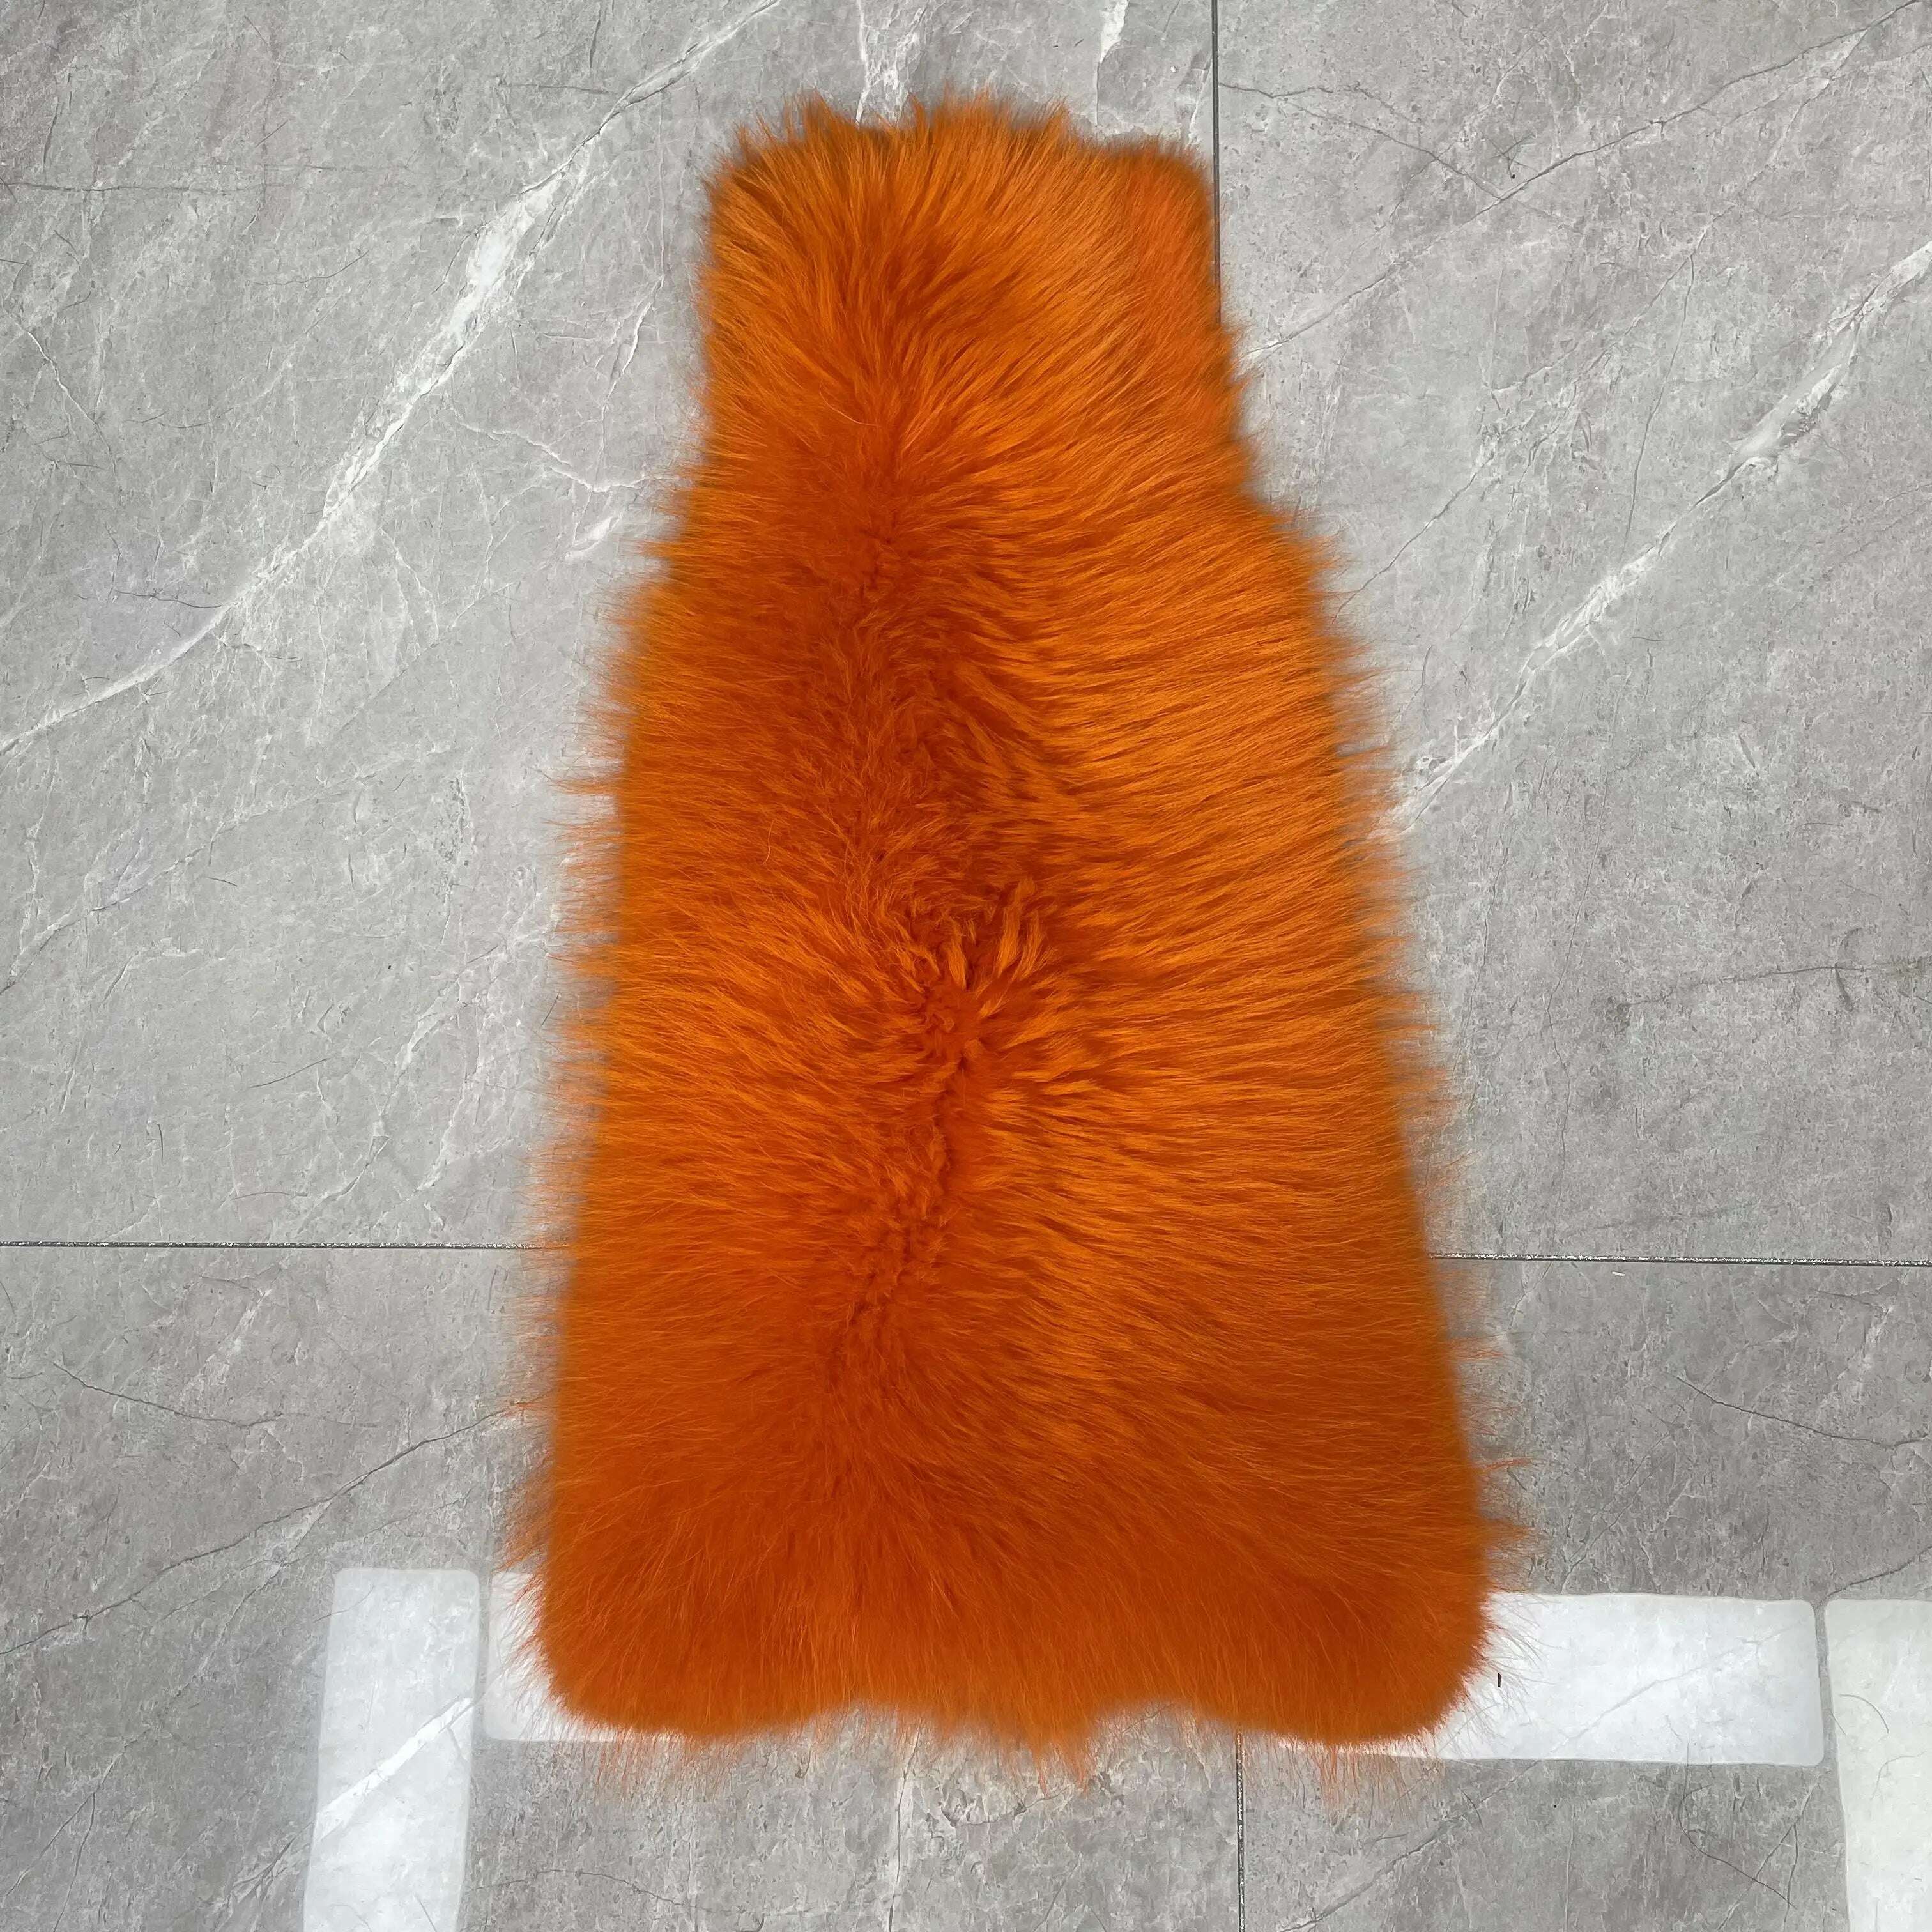 KIMLUD, Wholeskin Men Golden Fox Fur Long Coats Shawl Collar Winter Overcoats Genuine Natural Fox Furs Jacket, Orange / XS(88cm), KIMLUD Women's Clothes